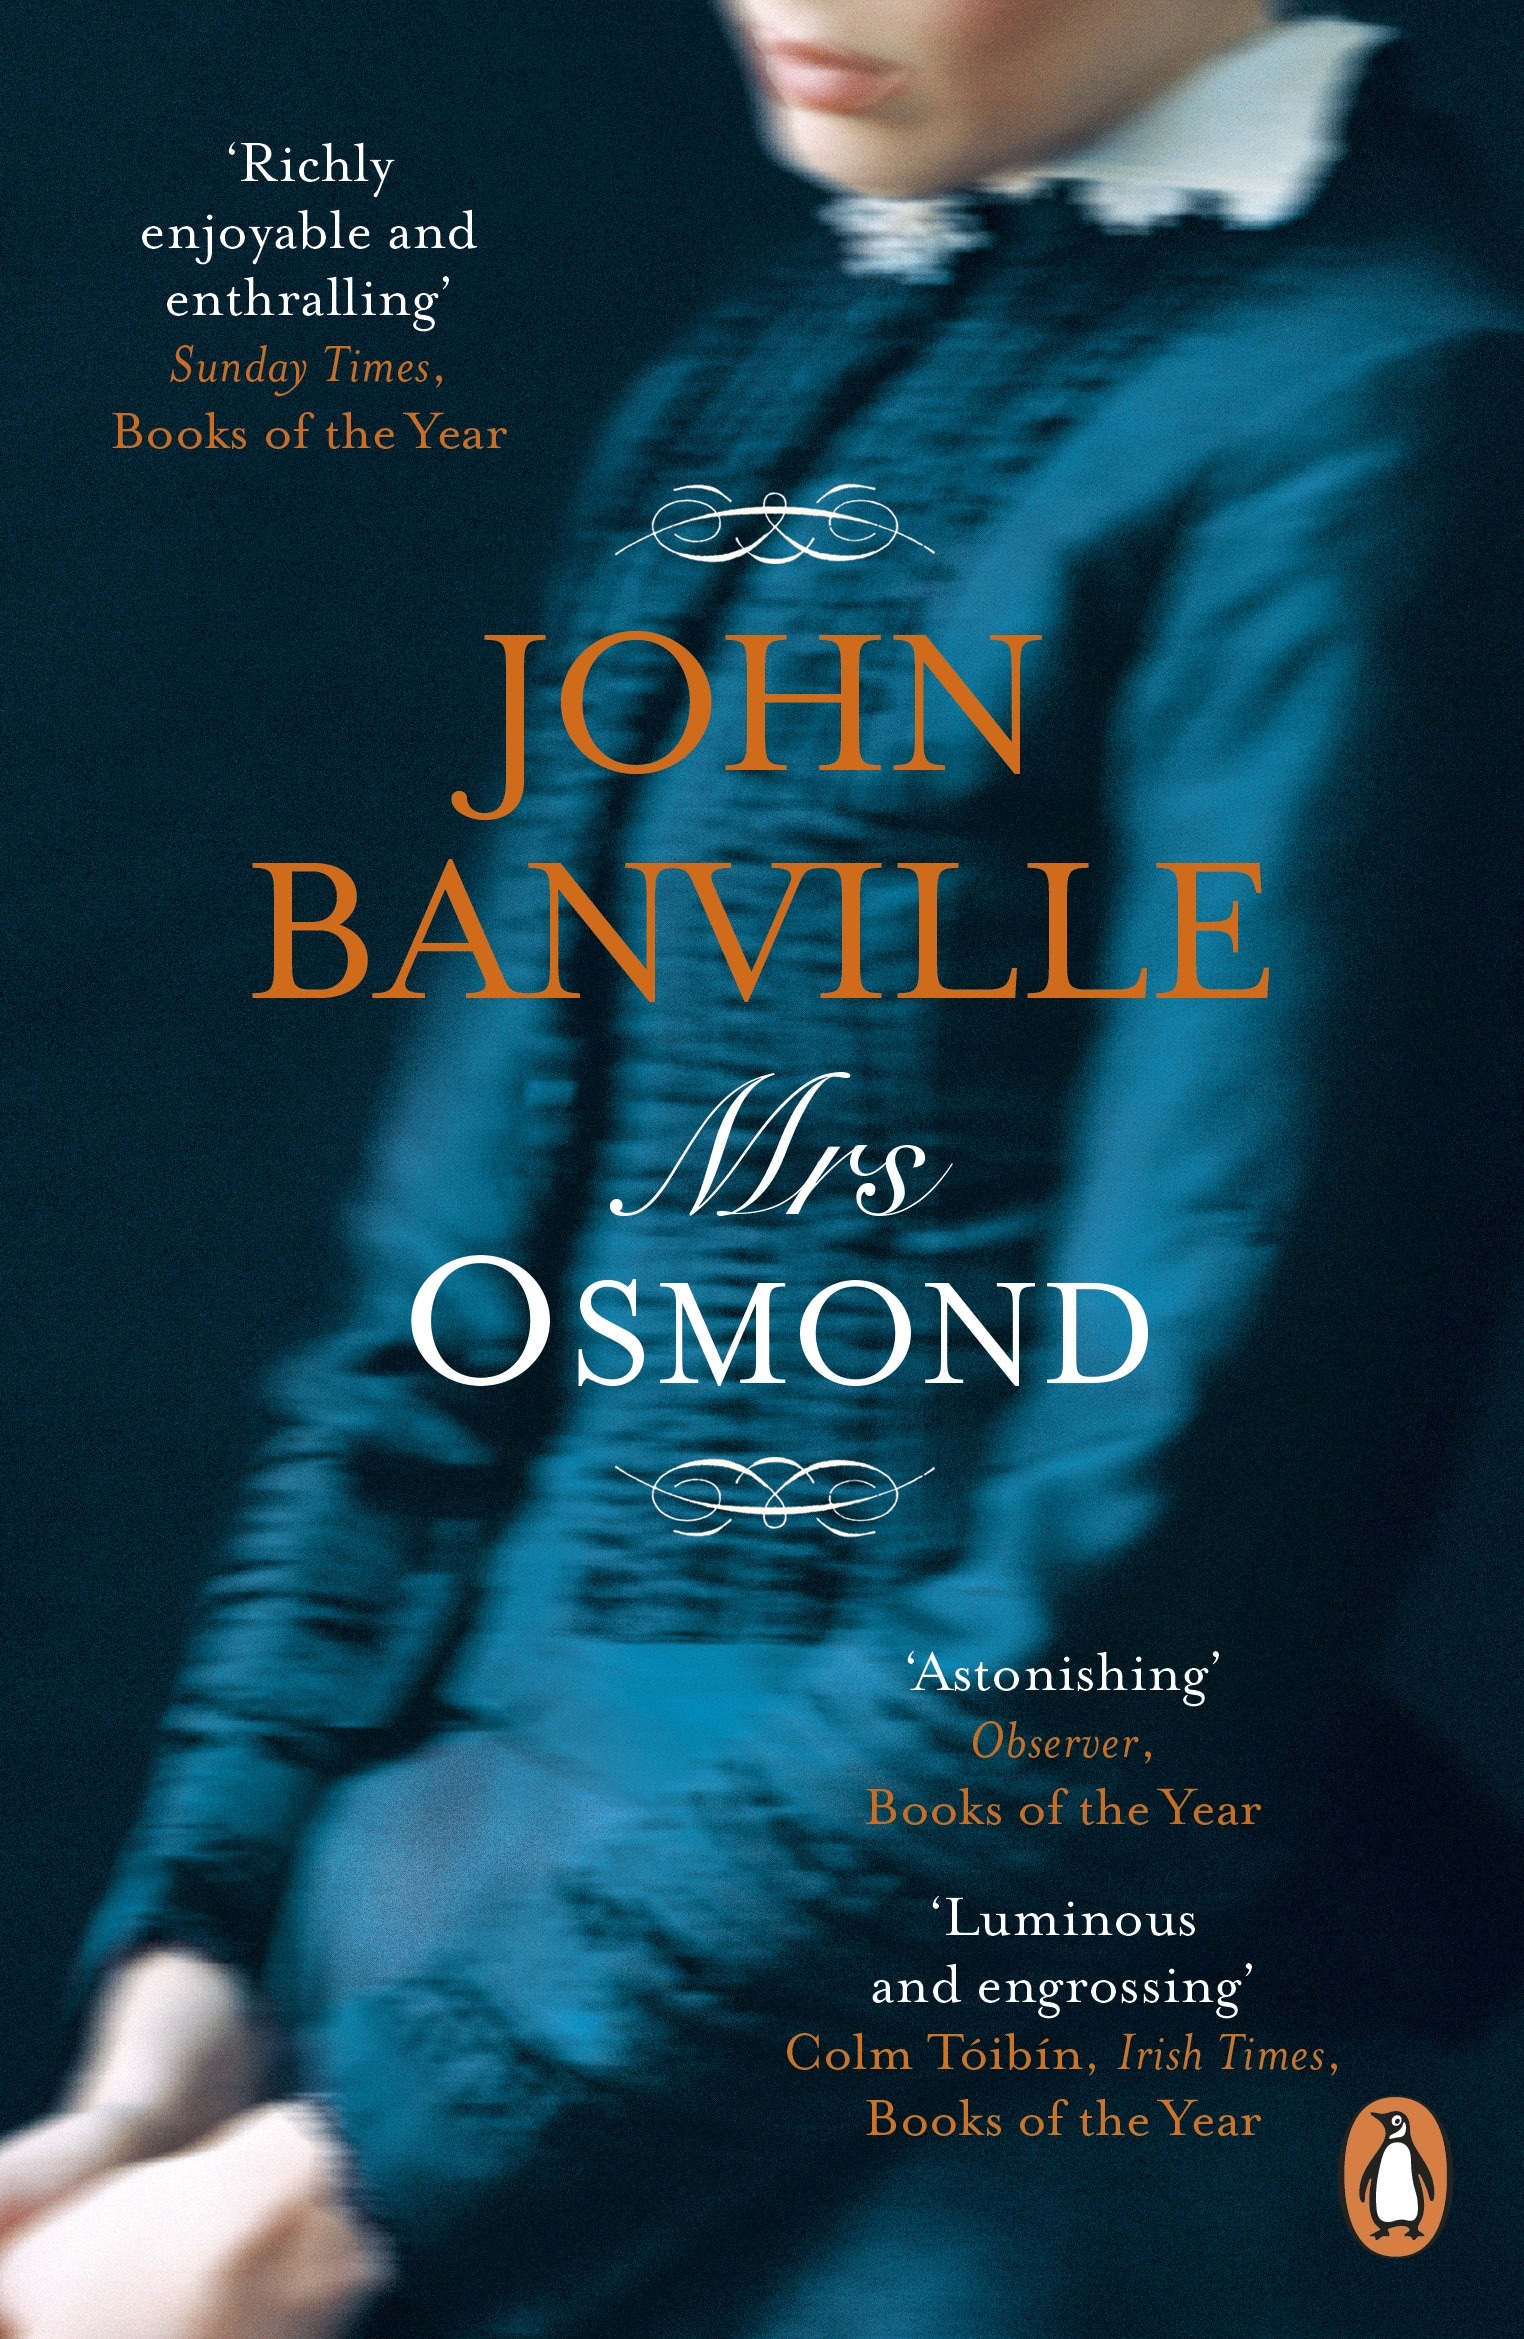 Book “Mrs Osmond” by John Banville — July 5, 2018